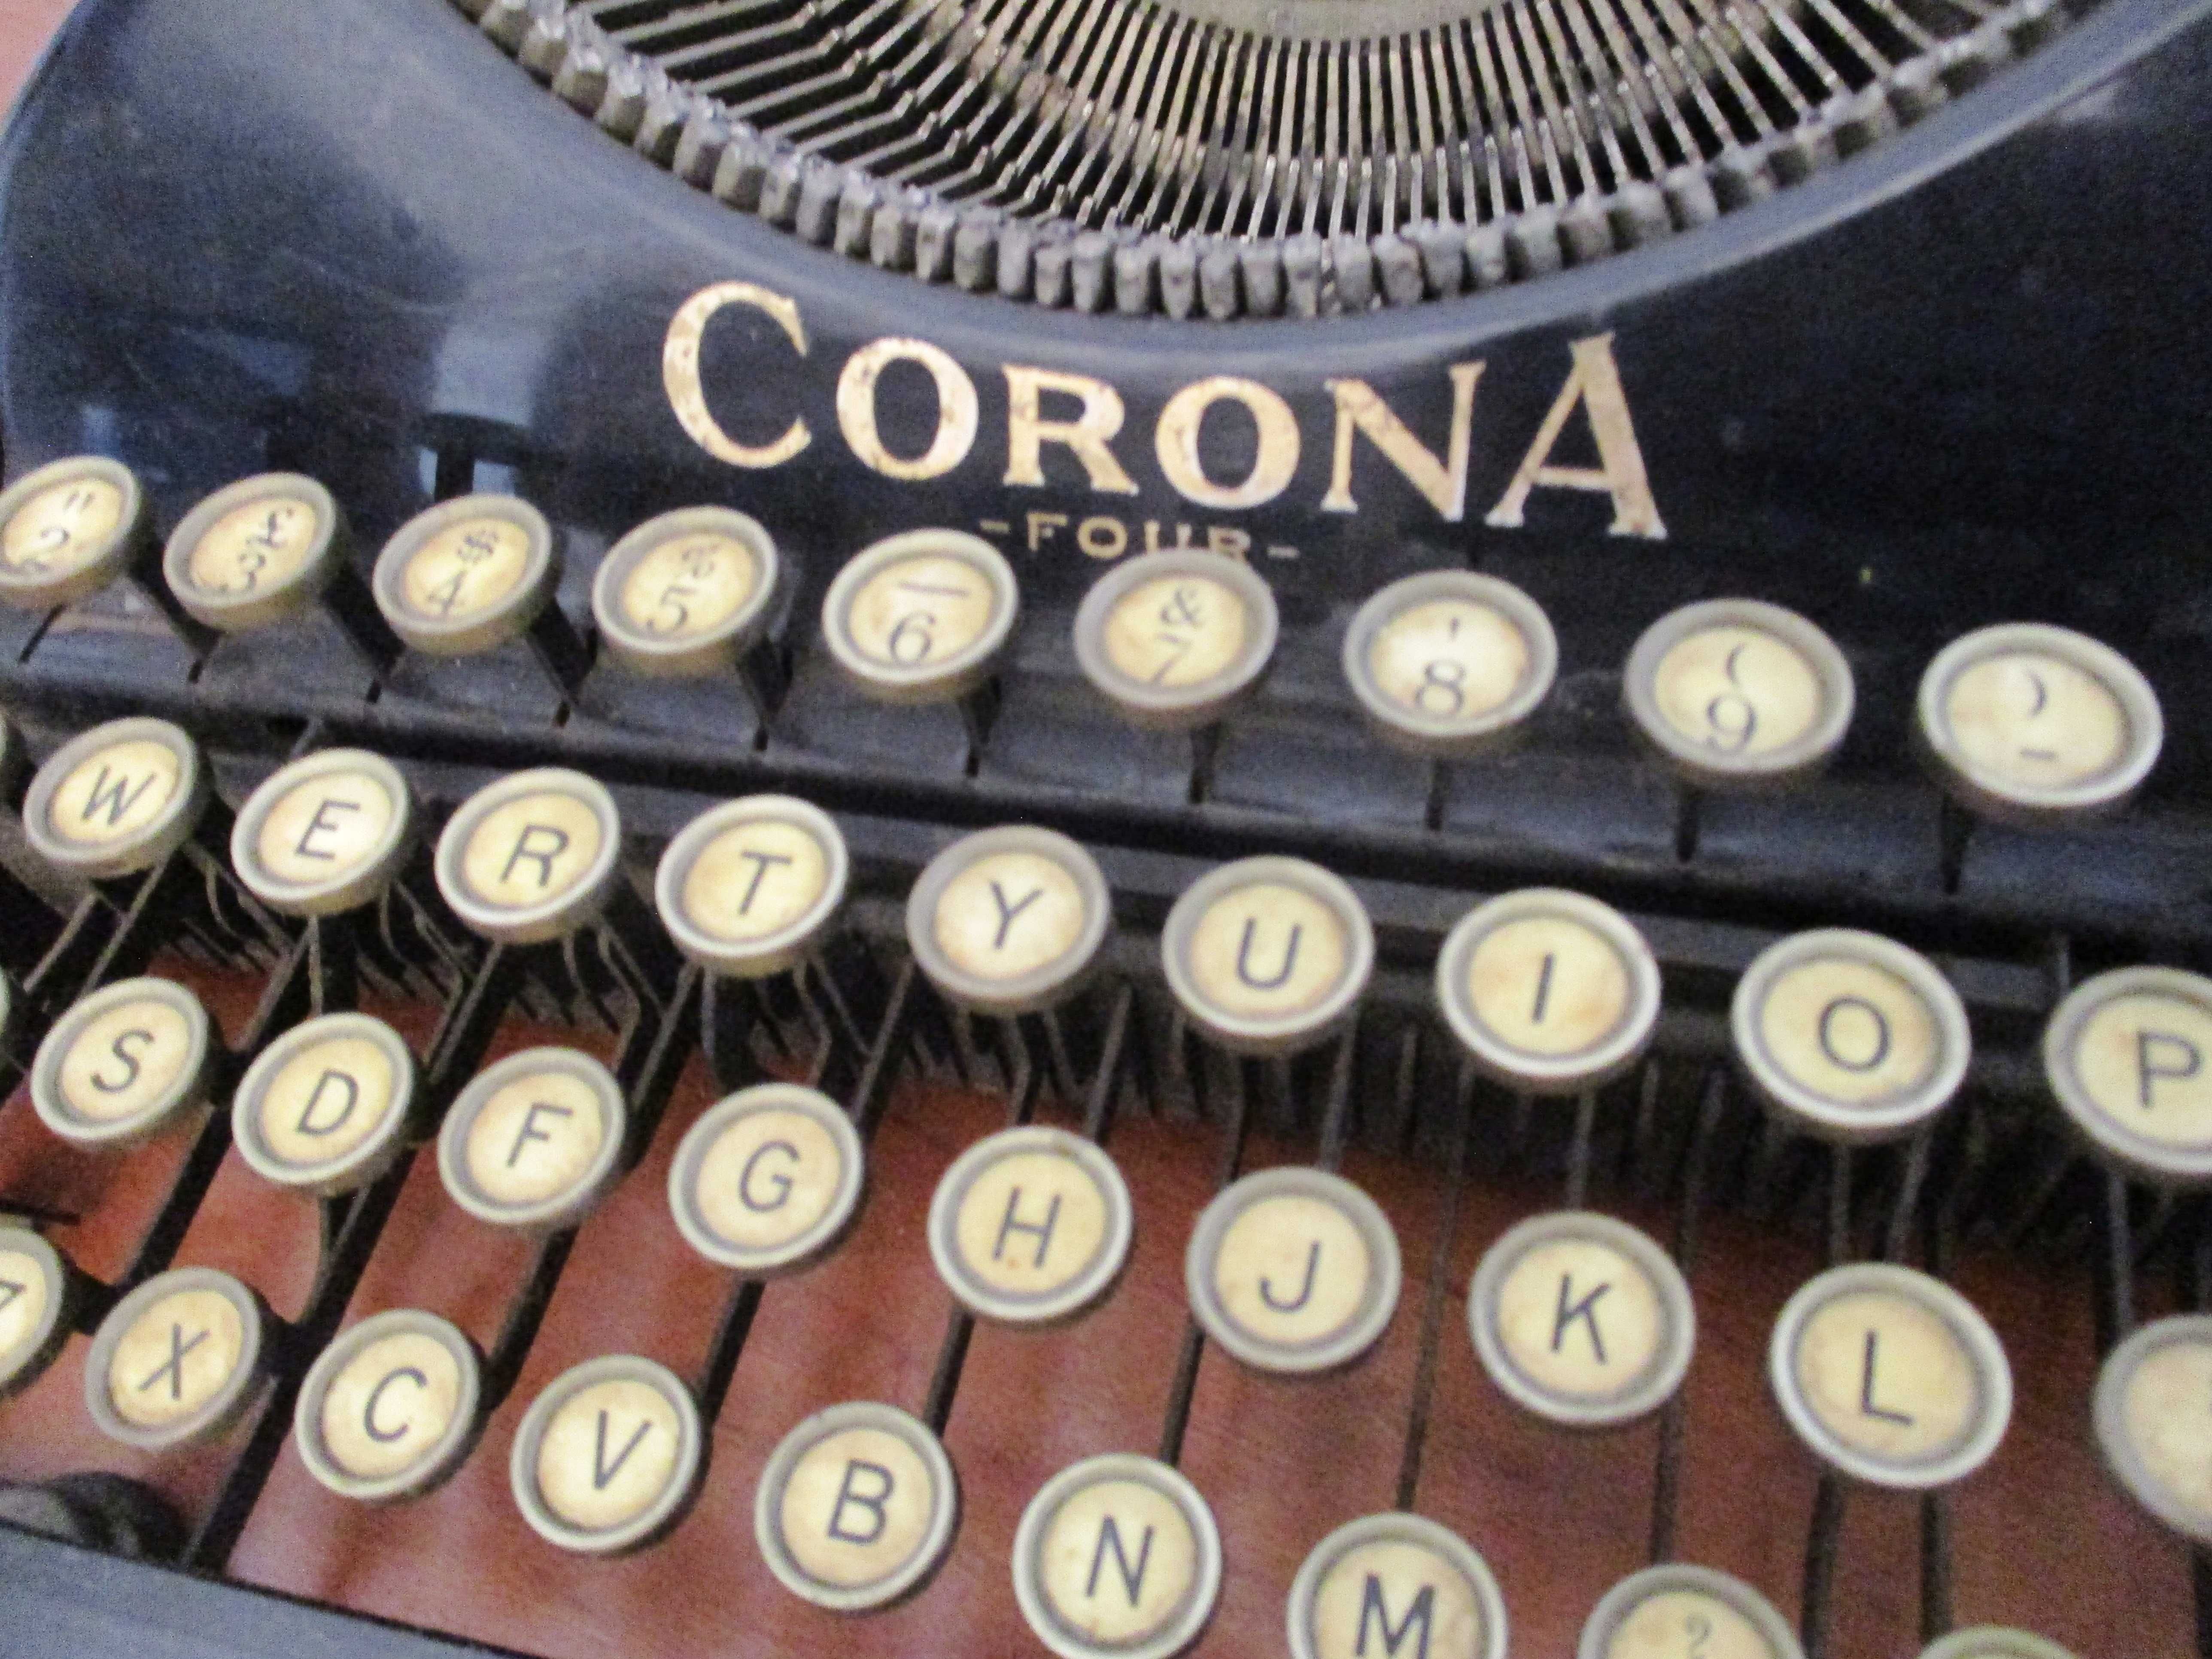 Maquina de escrever Corona